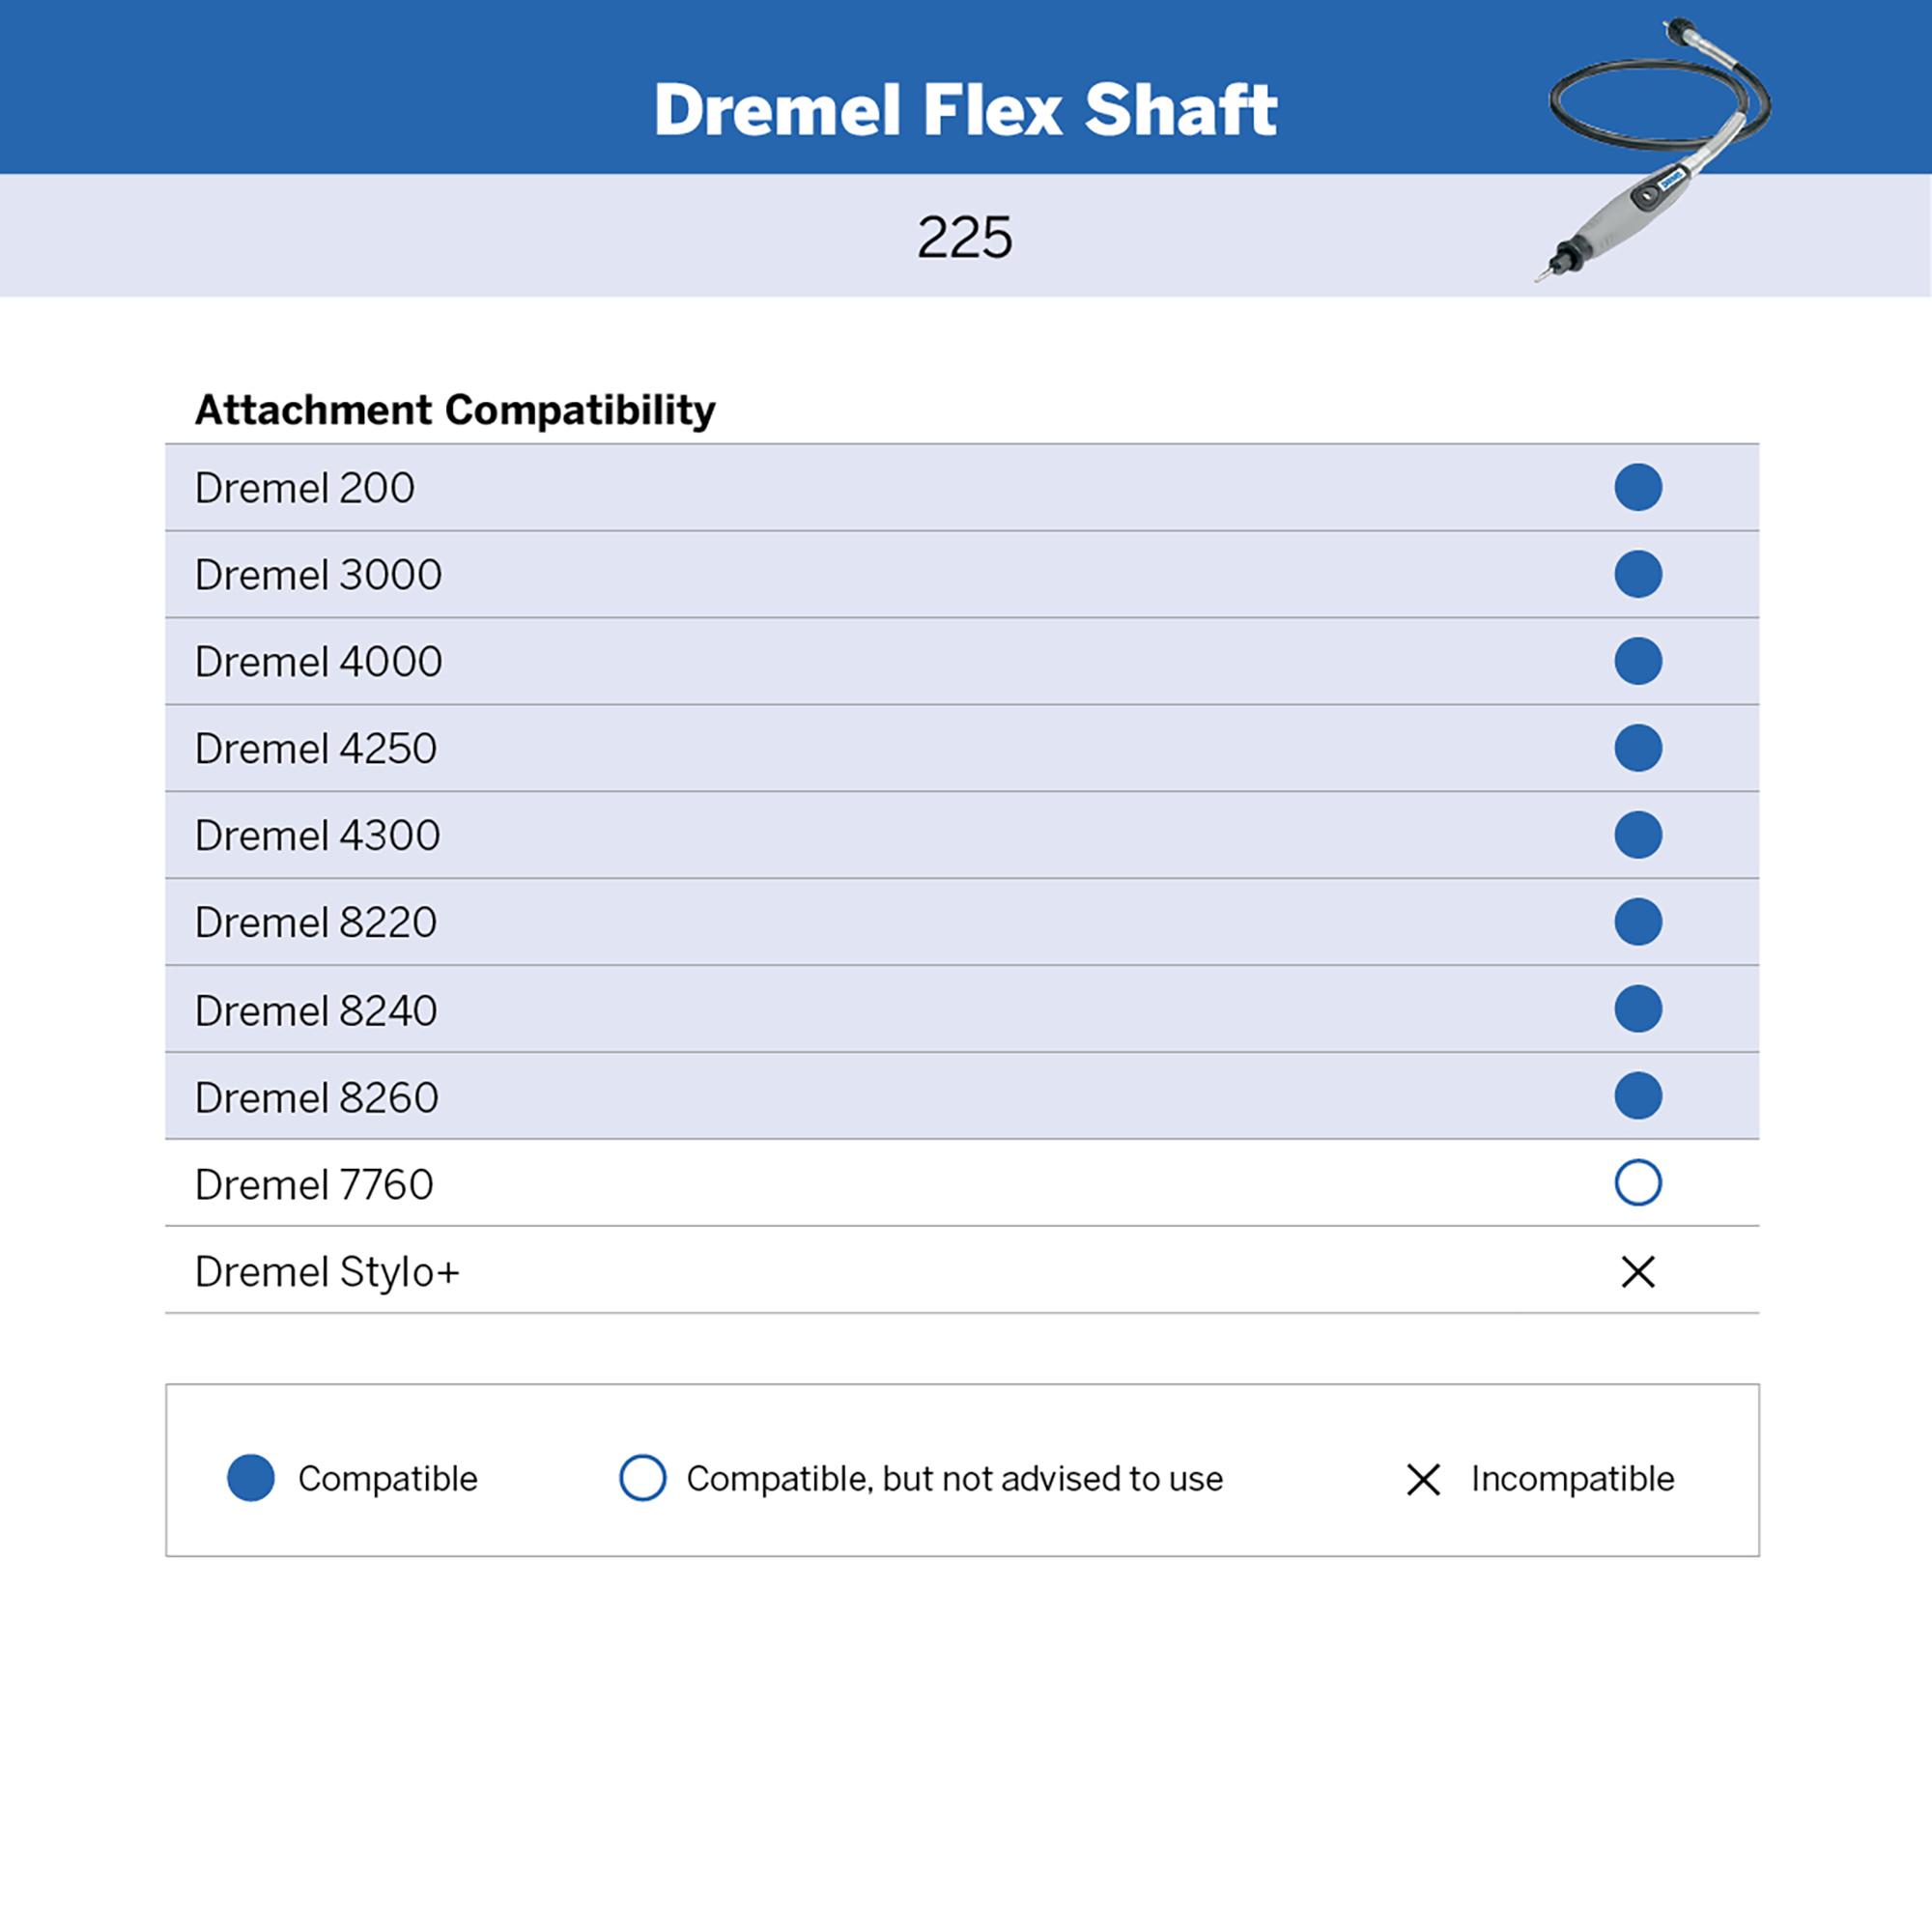 DREMEL® Flexible Shaft Attachments to Reach